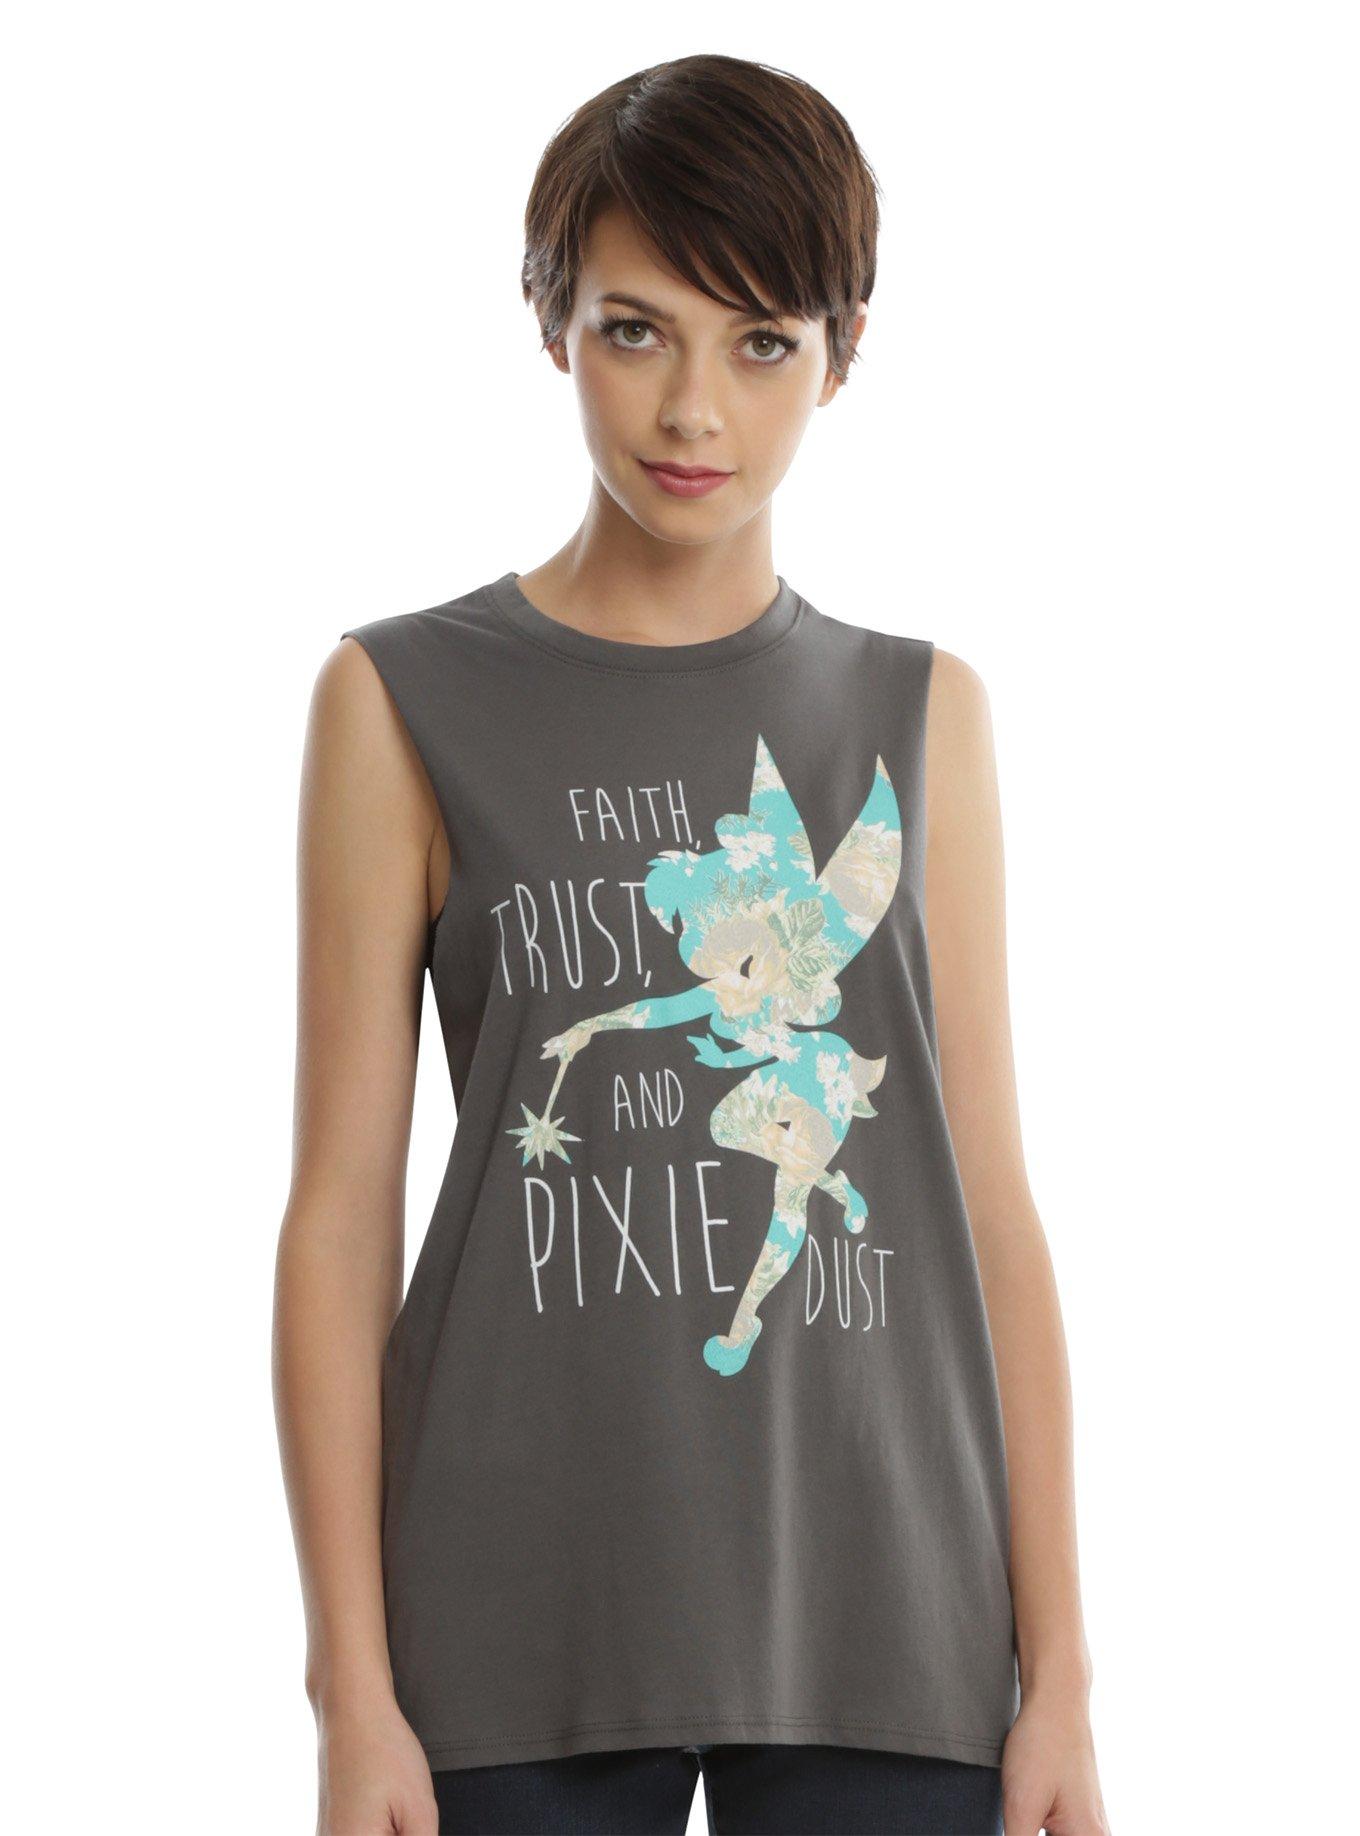 Disney Peter Pan Tinker Bell Faith Trust Pixie Dust Girls Muscle Top, BLACK, hi-res